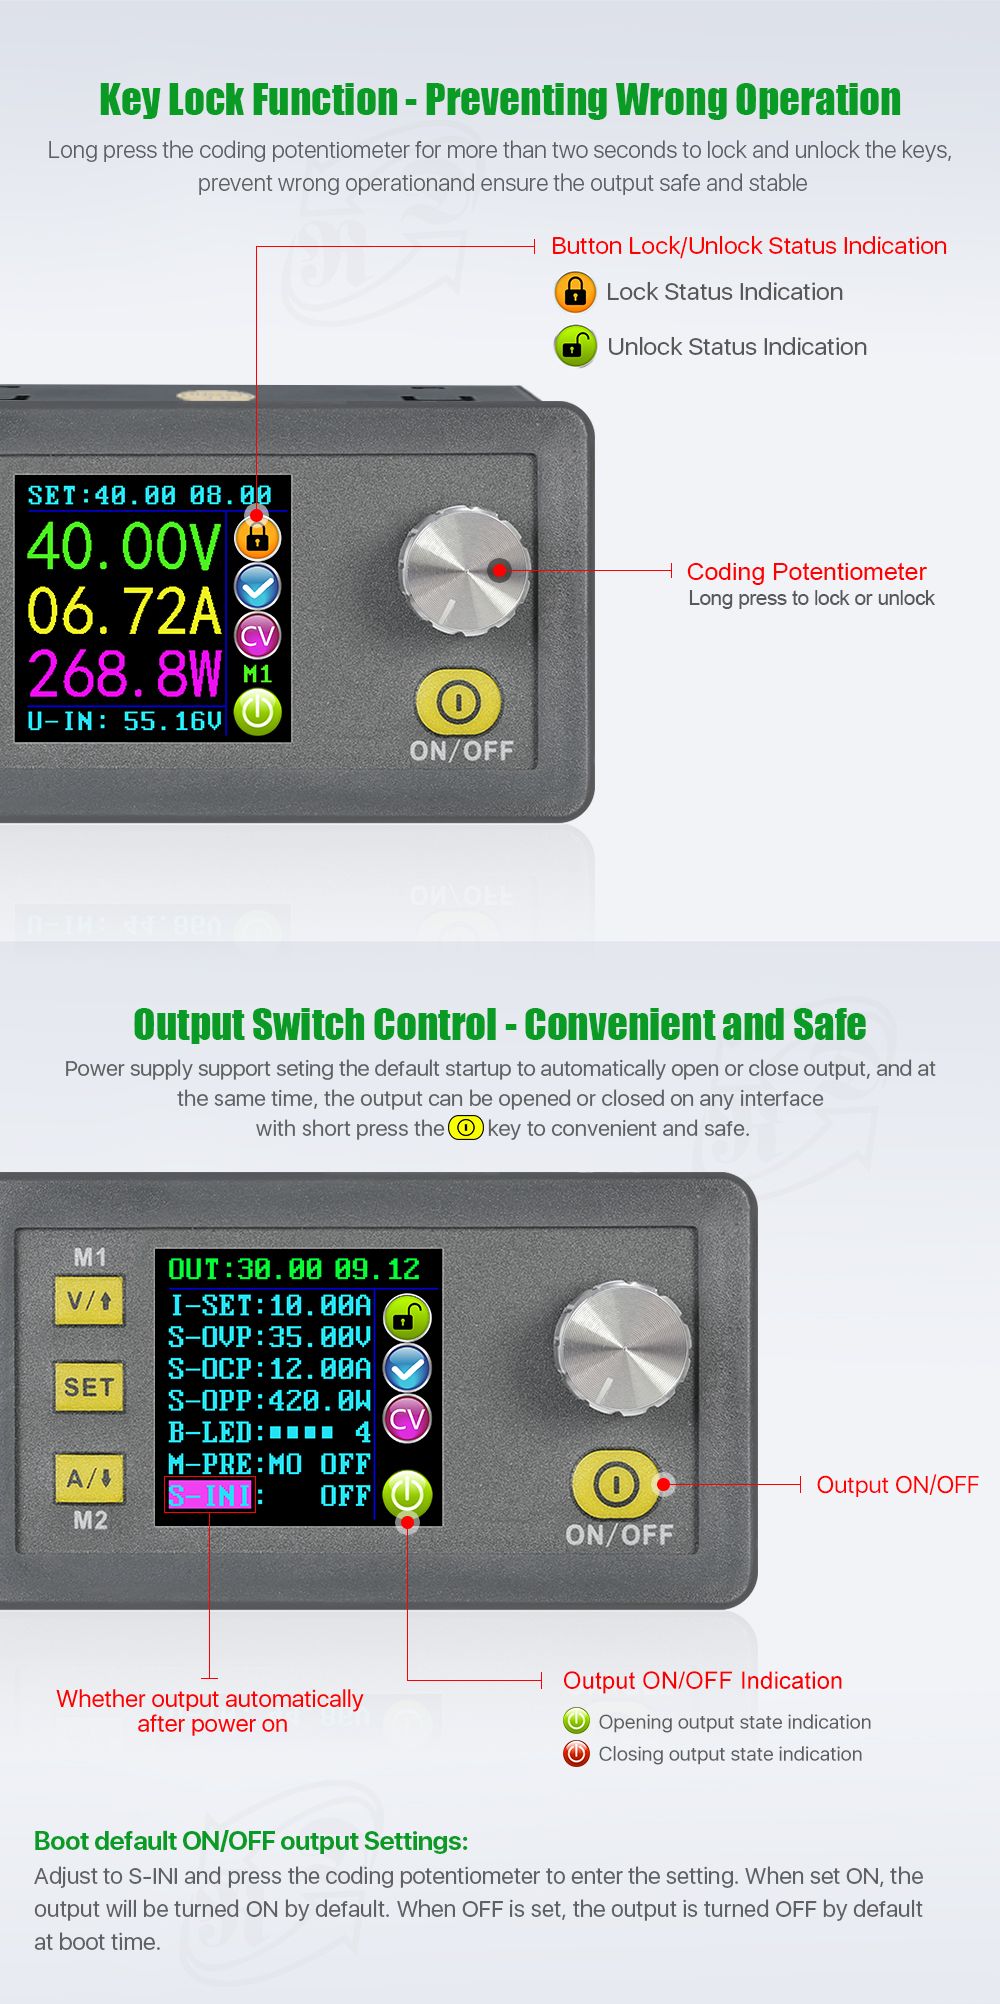 RIDENreg-DPS5015-Communication-Constant-Voltage-Current-Step-down-Digital-Power-Supply-Module-Buck-V-1219981